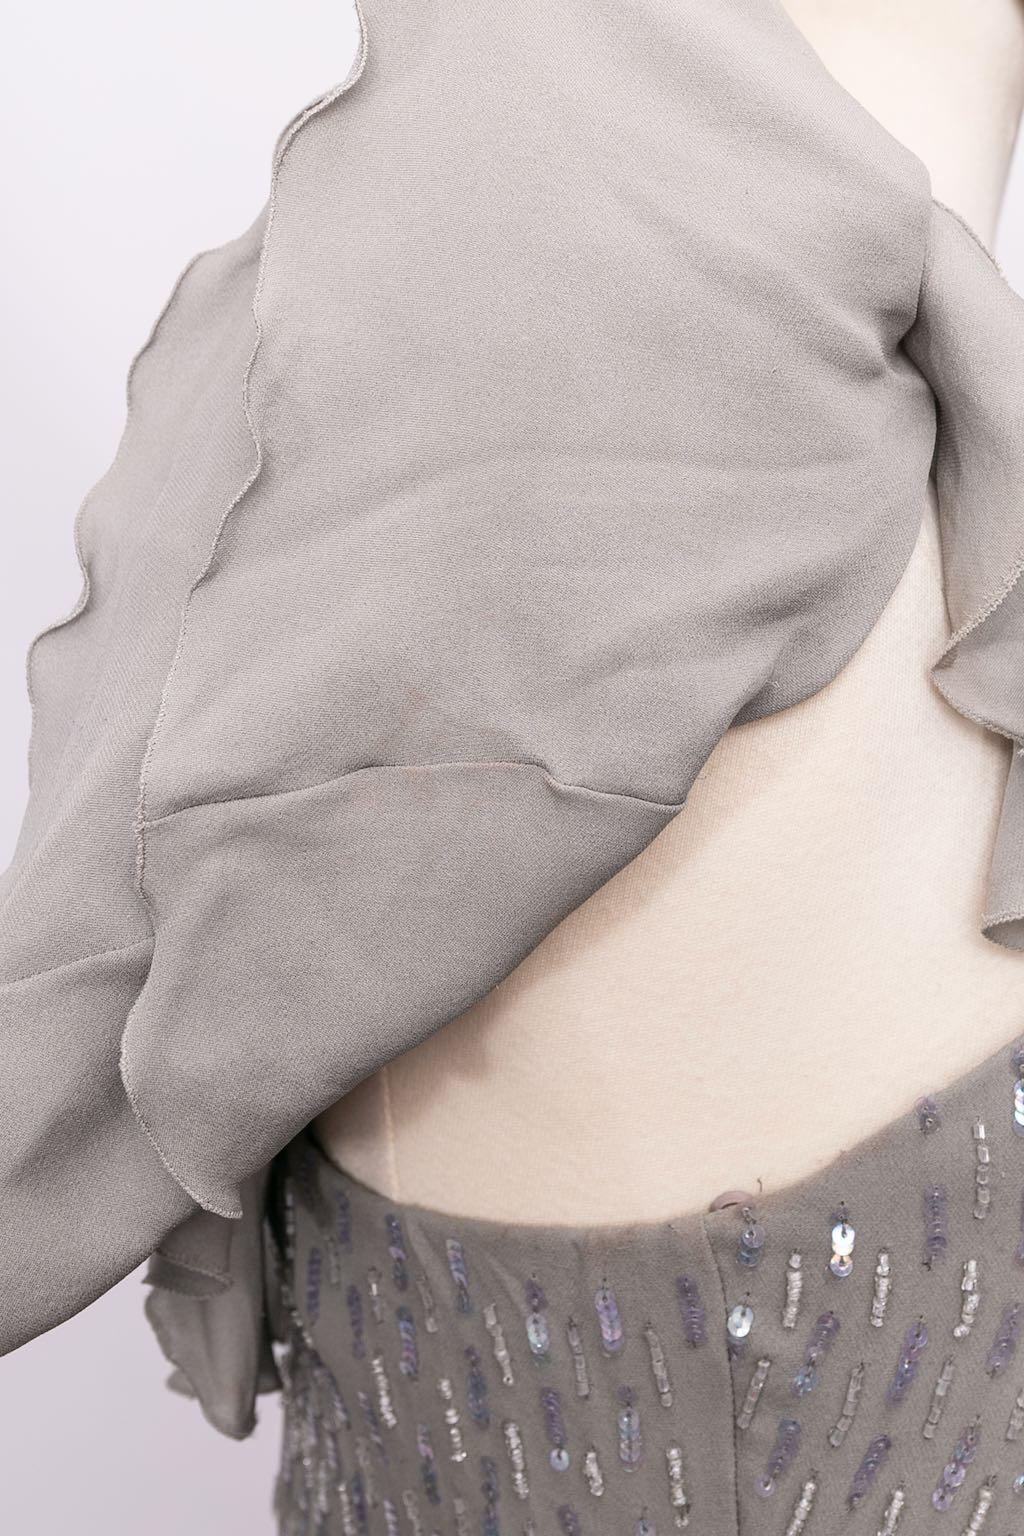 Loris Azzaro - Robe en soie grise brodée, taille 36FR en vente 4